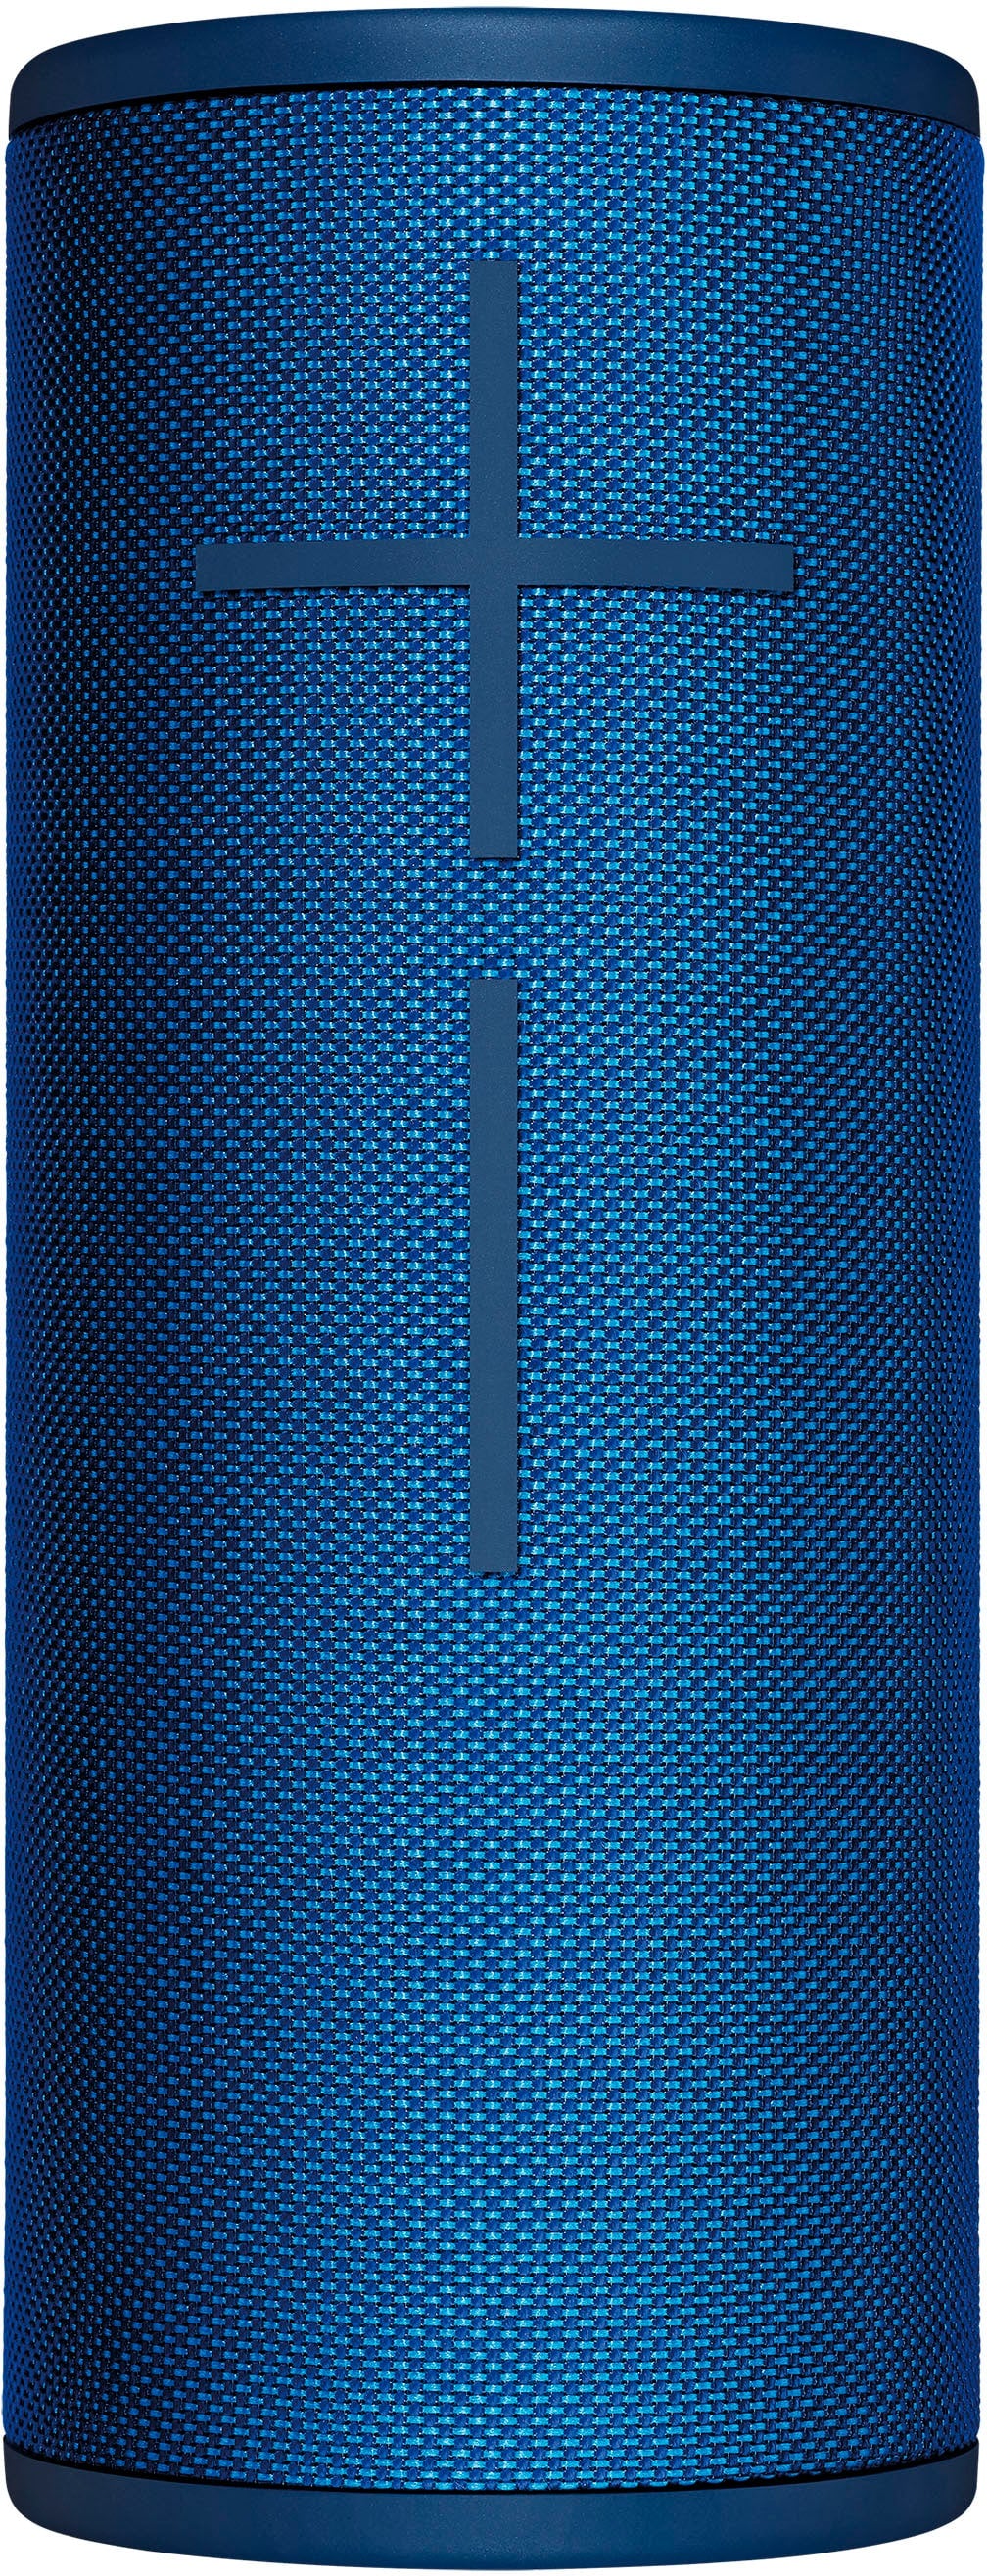 Ultimate Ears - BOOM 3 Portable Wireless Bluetooth Speaker with Waterproof/Dustproof Design - Lagoon Blue_0